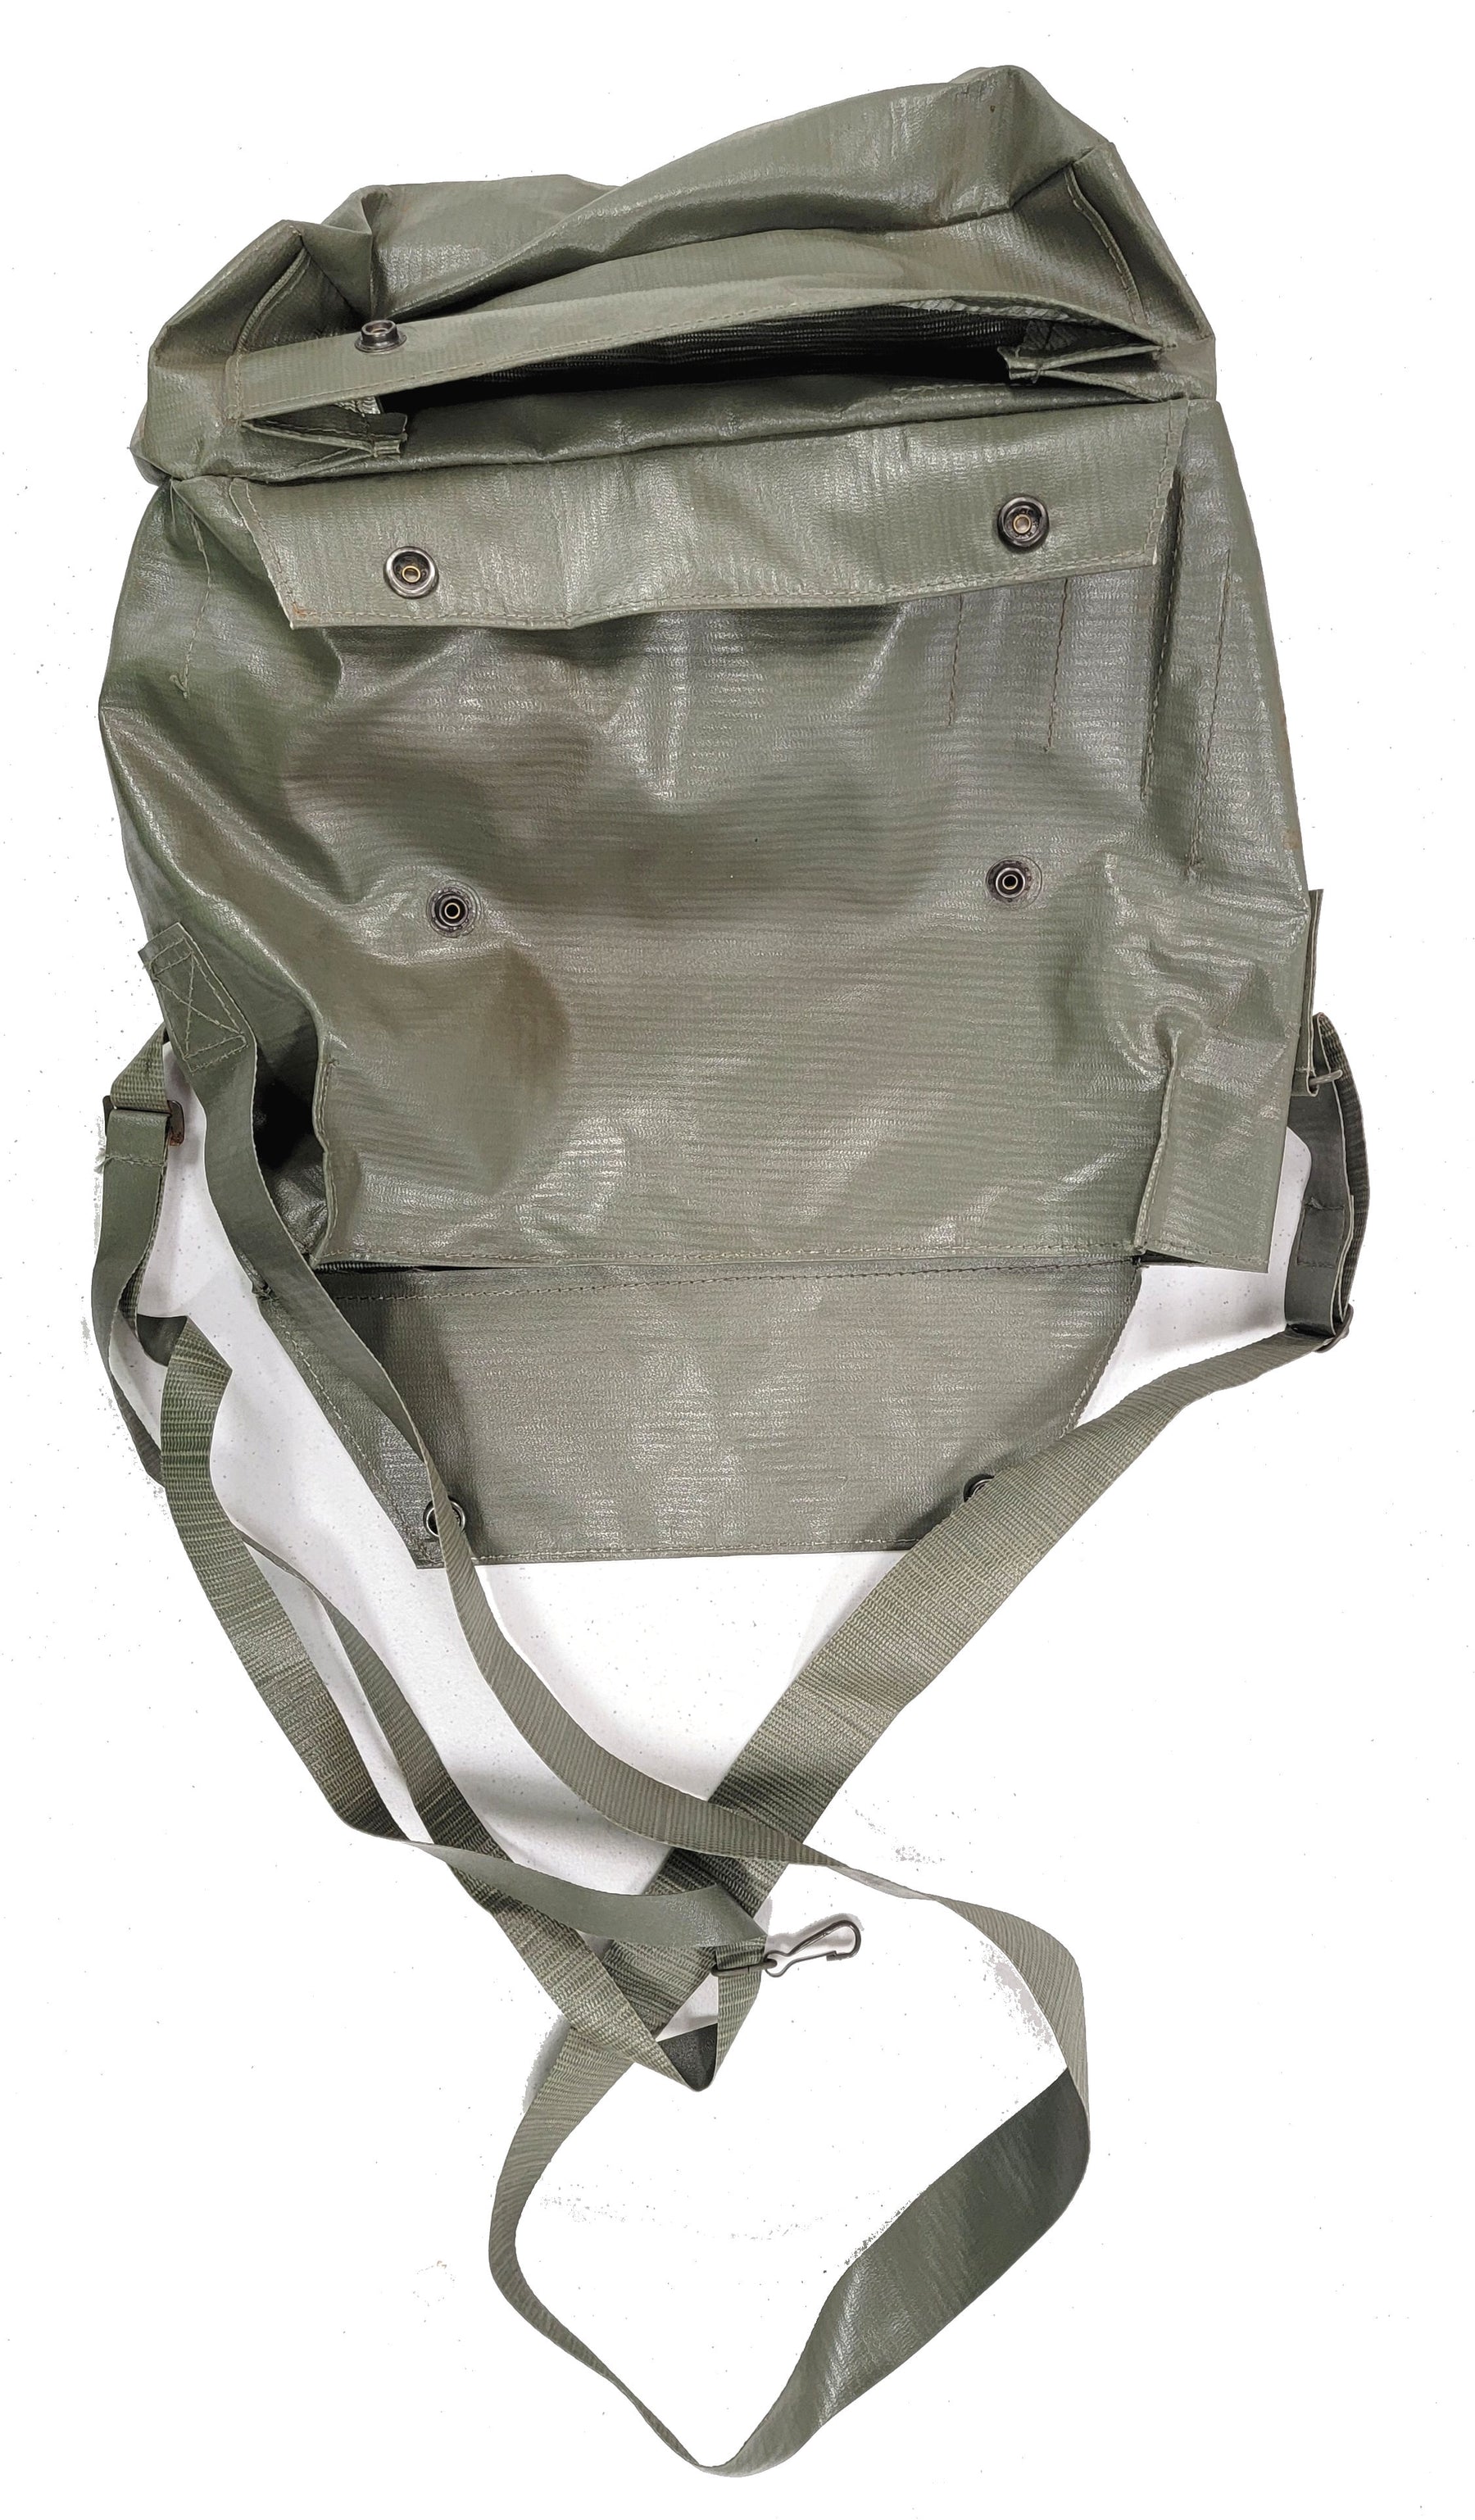 CLEARANCE - Czech M10 Gas Mask Bag - Military Surplus Utility Bag